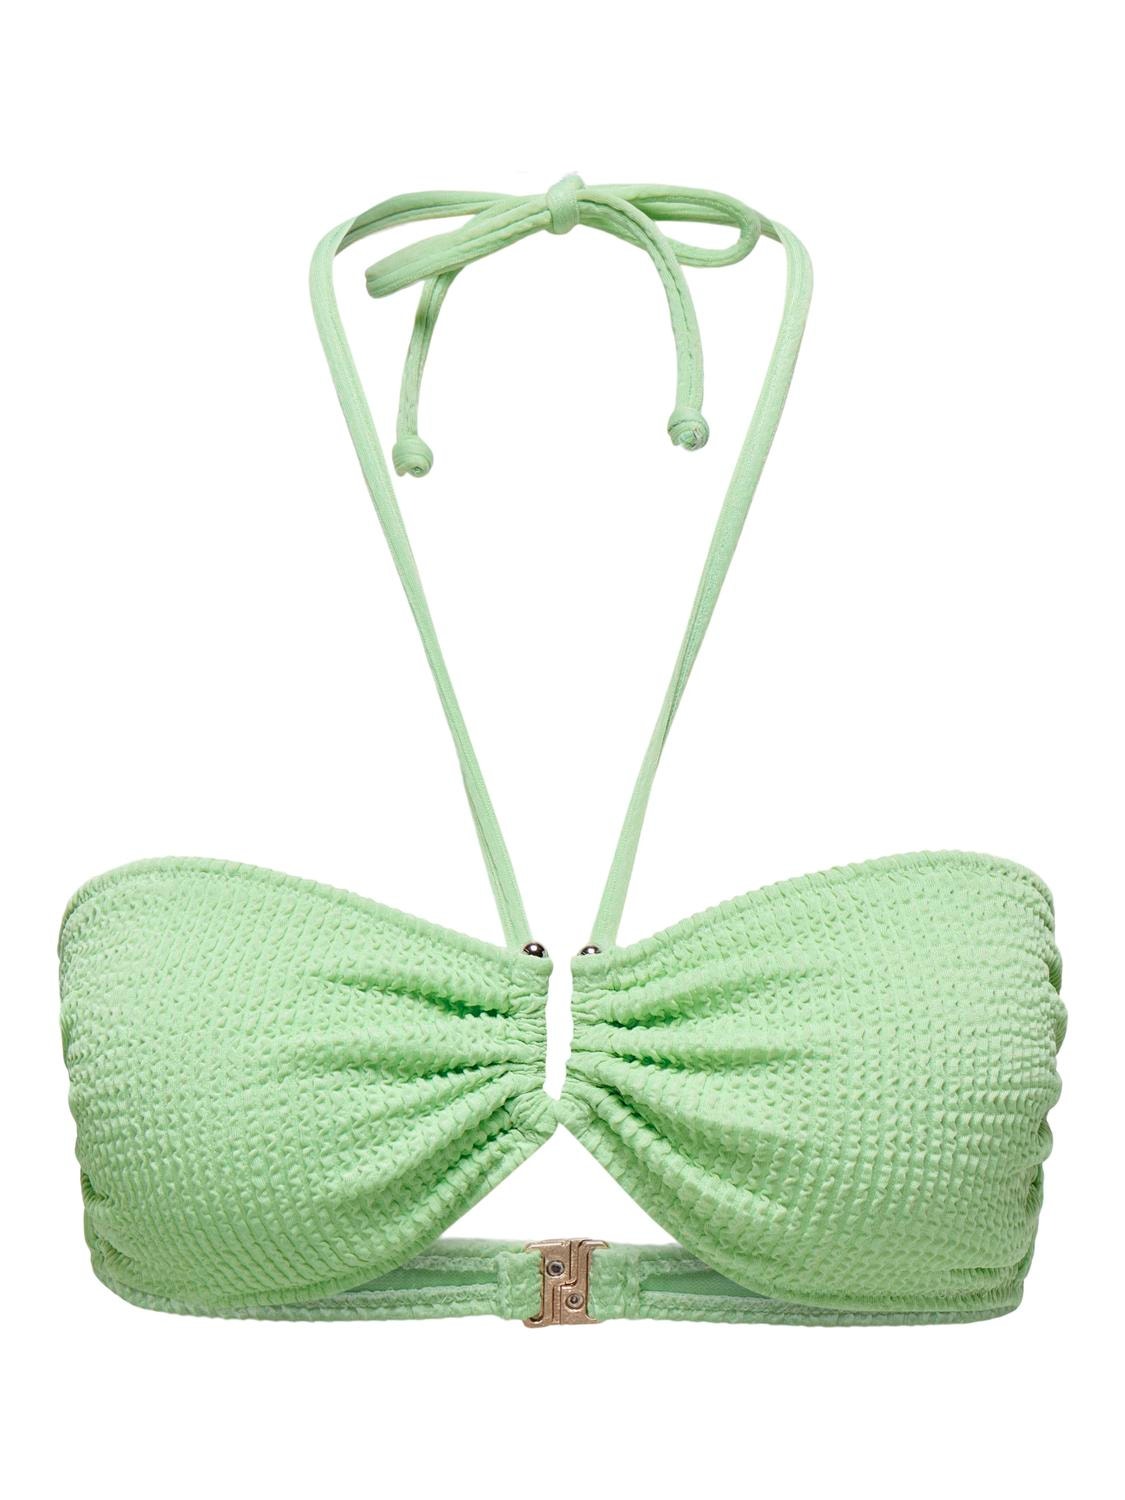 ONLY Bandeau bikini top -Patina Green - 15314260